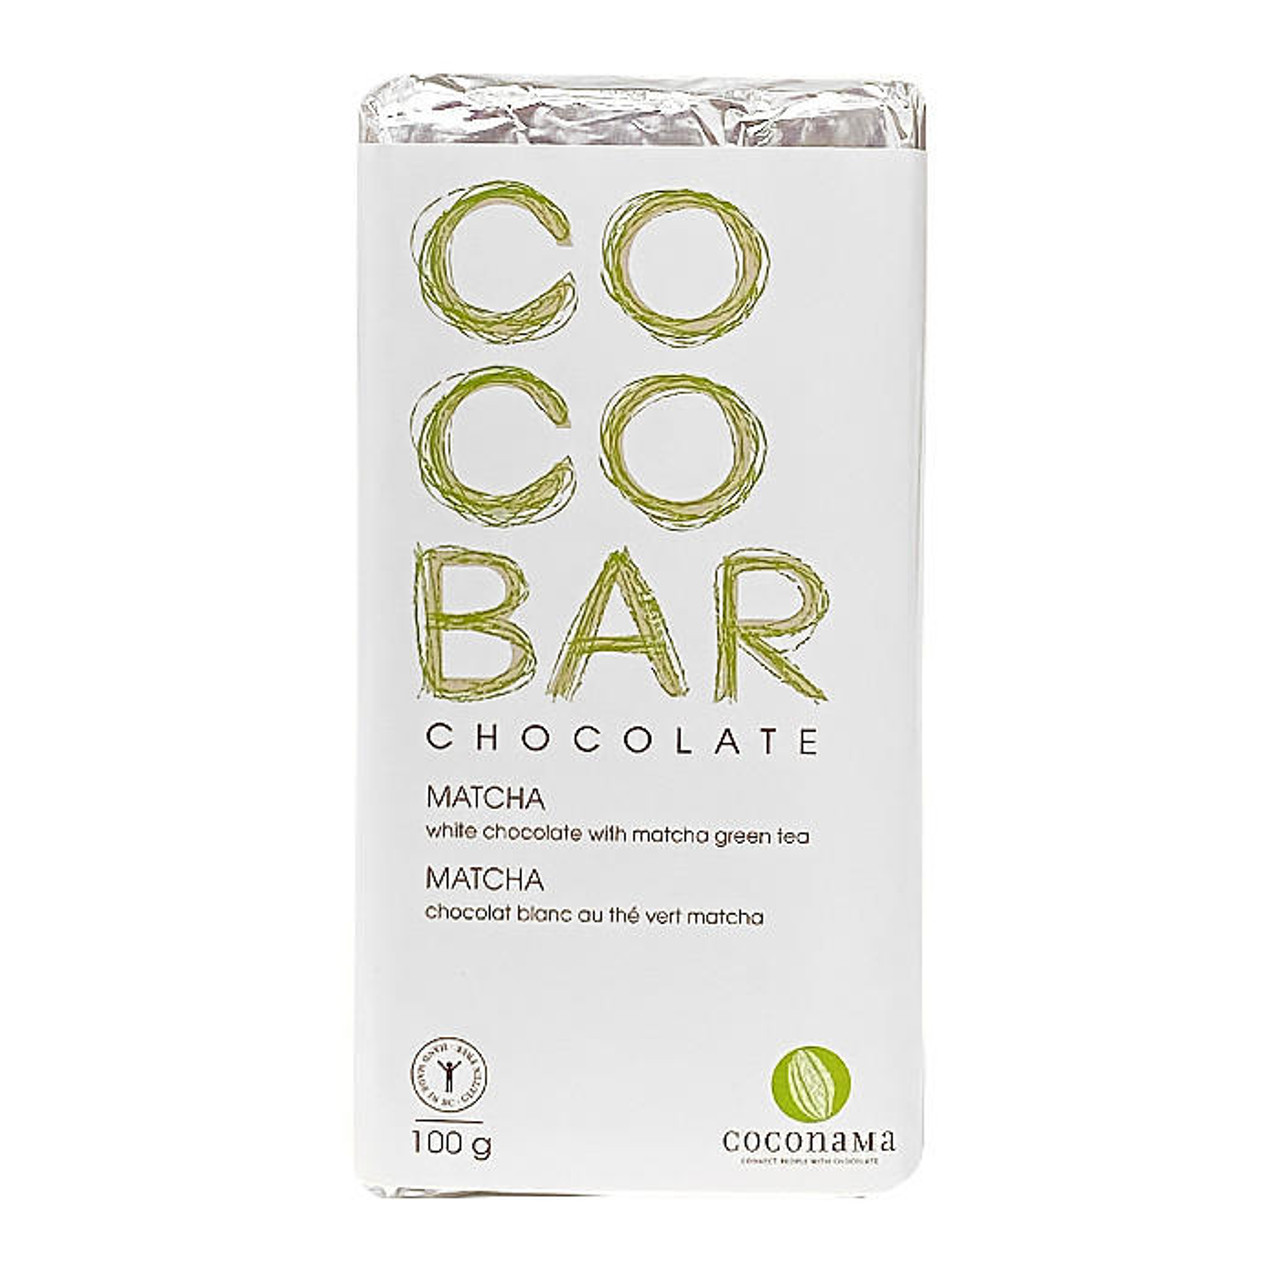 COCOBAR Matcha White Chocolate Bar, 100g - The Gourmet Warehouse